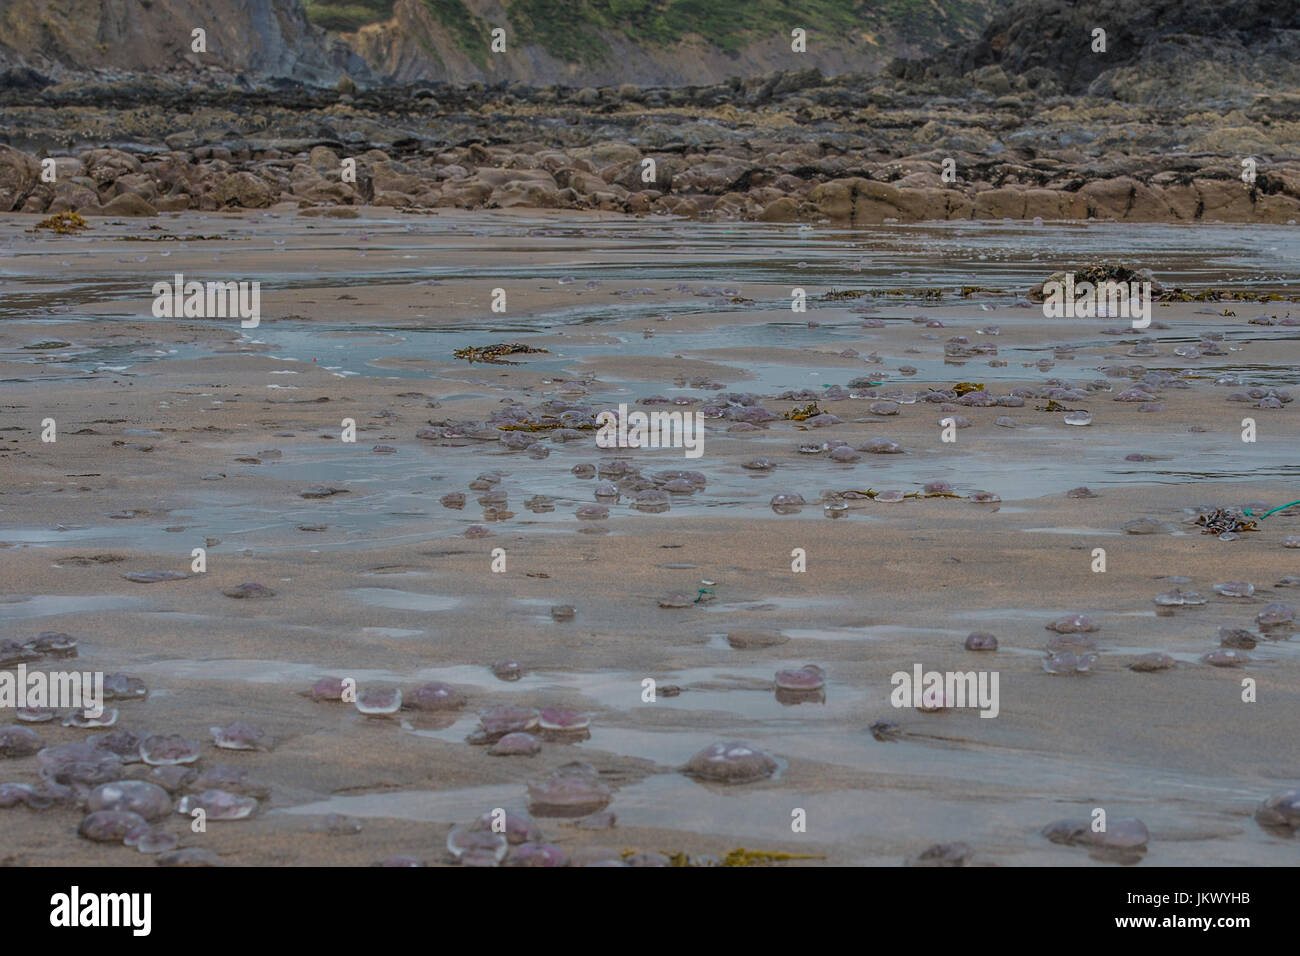 dead jelly fish stranded on beach Stock Photo